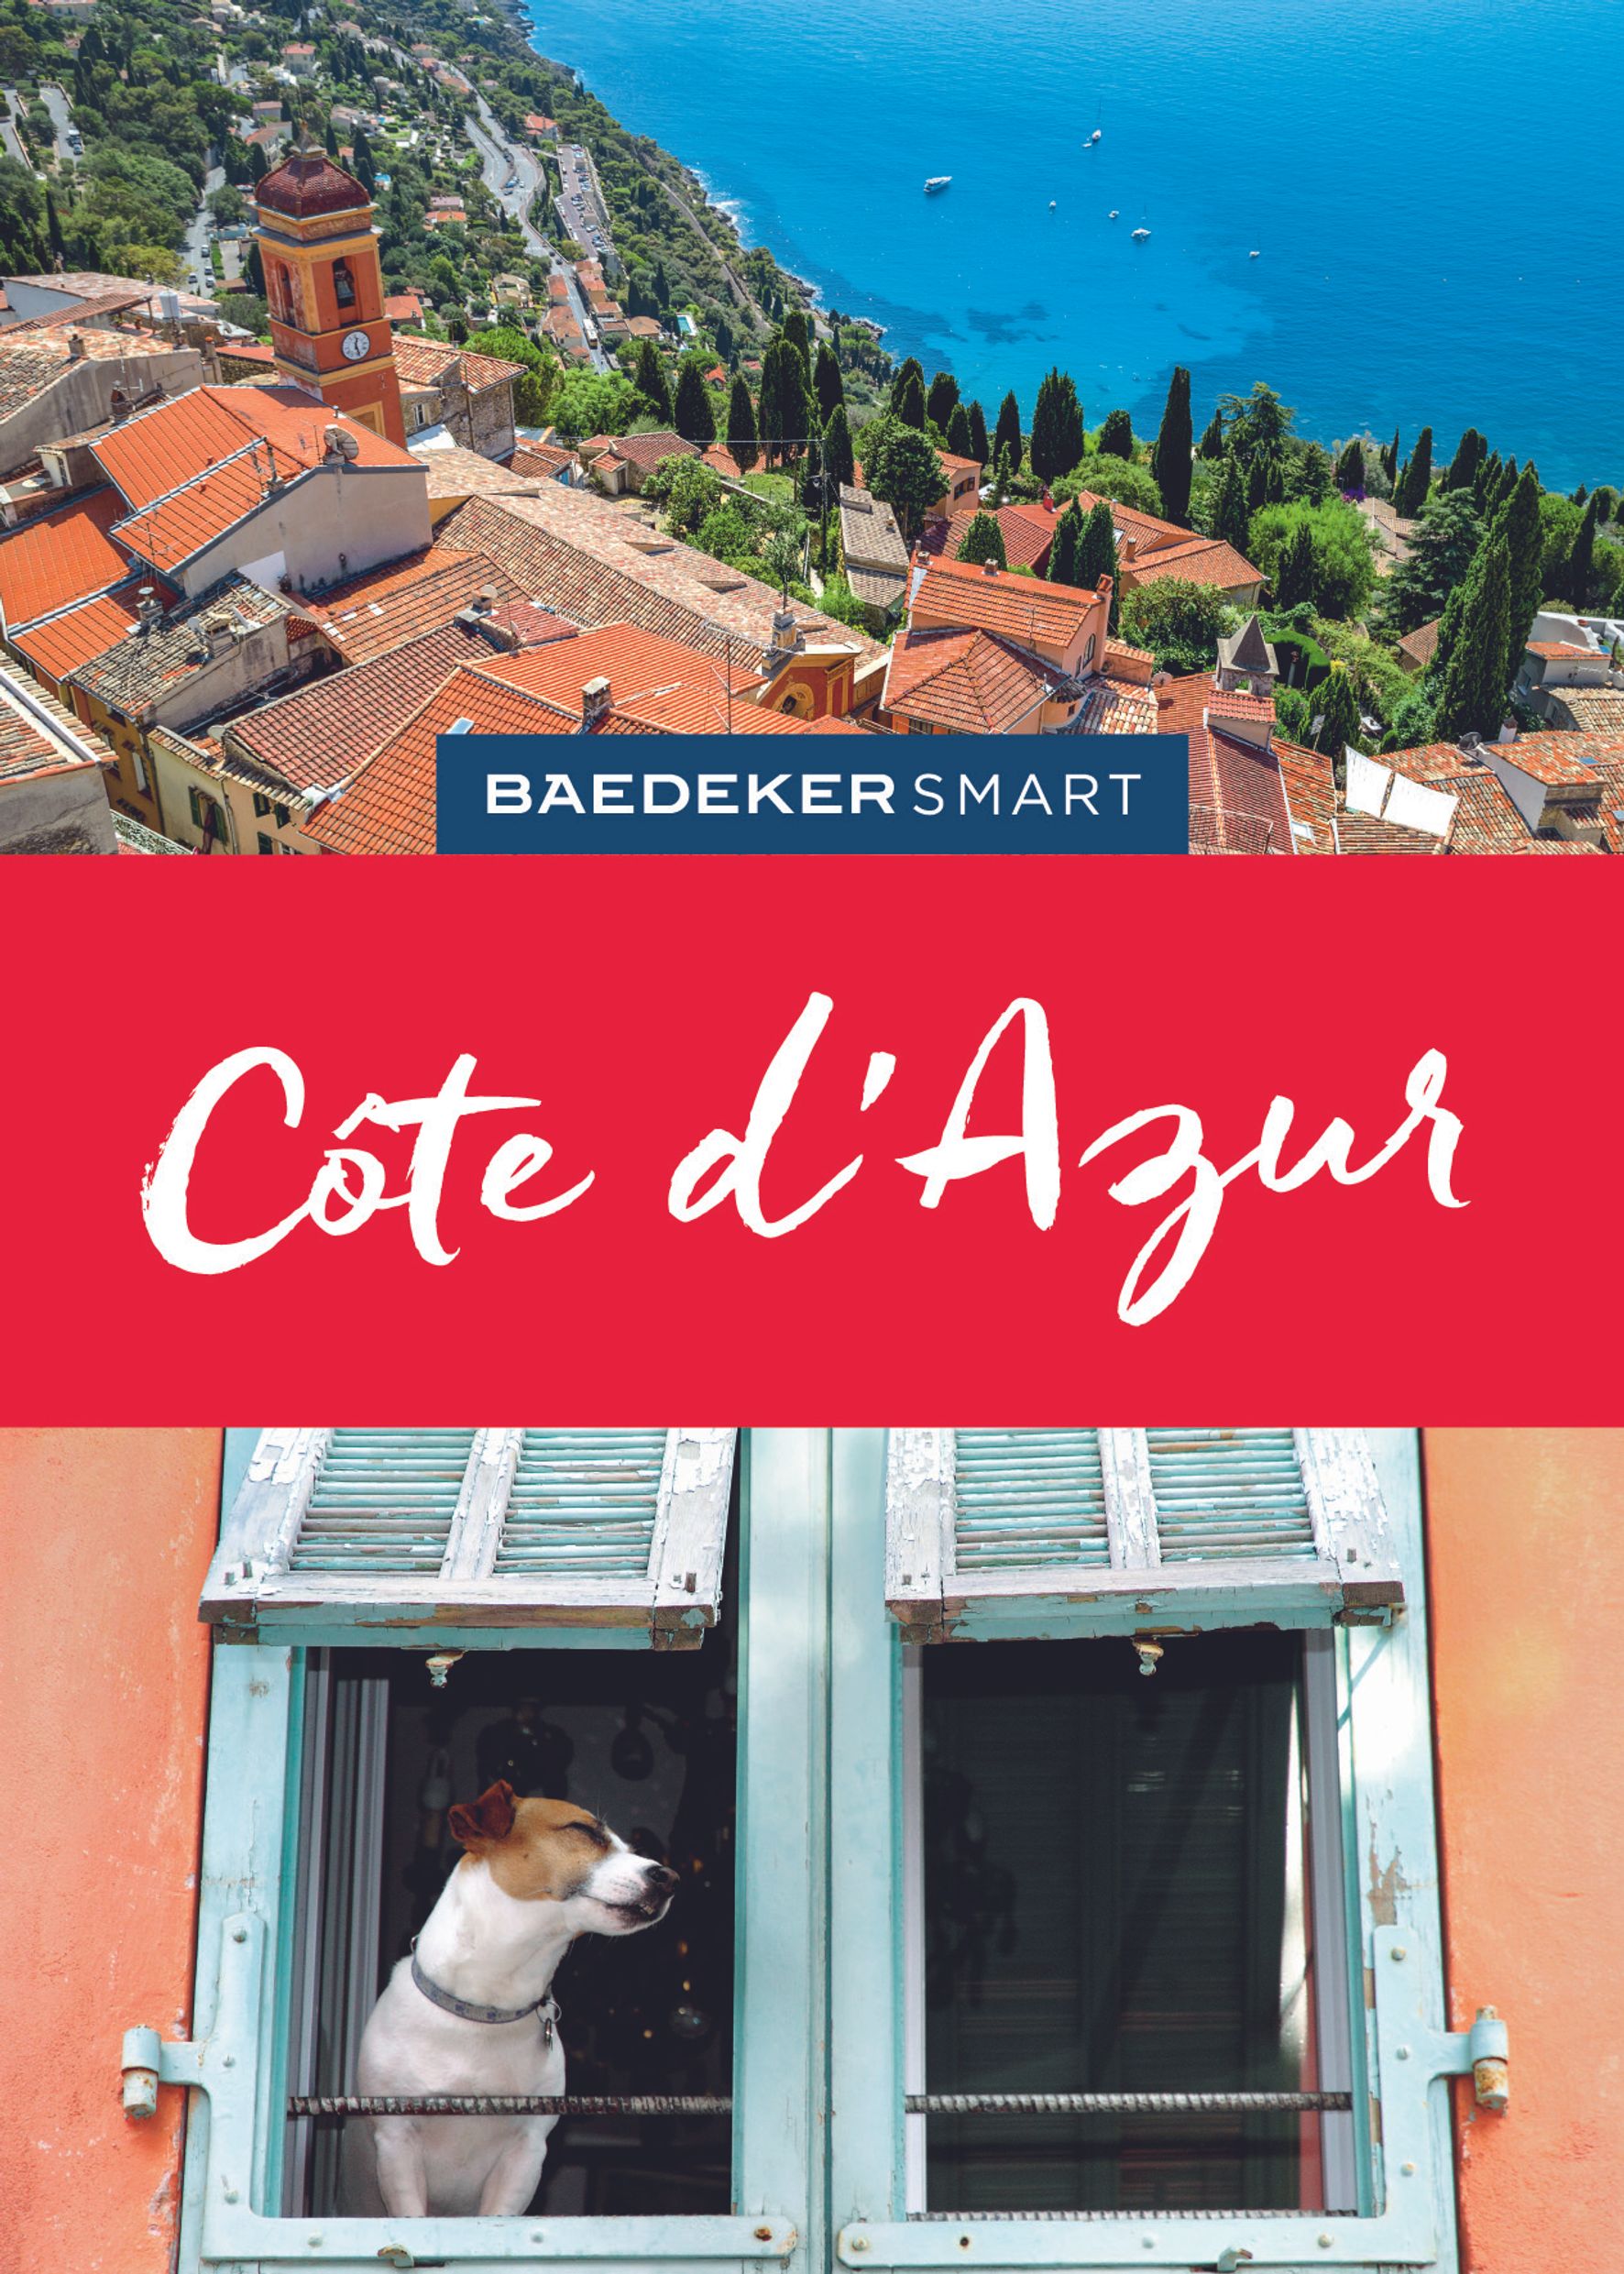 Baedeker Cote d'Azur (eBook)